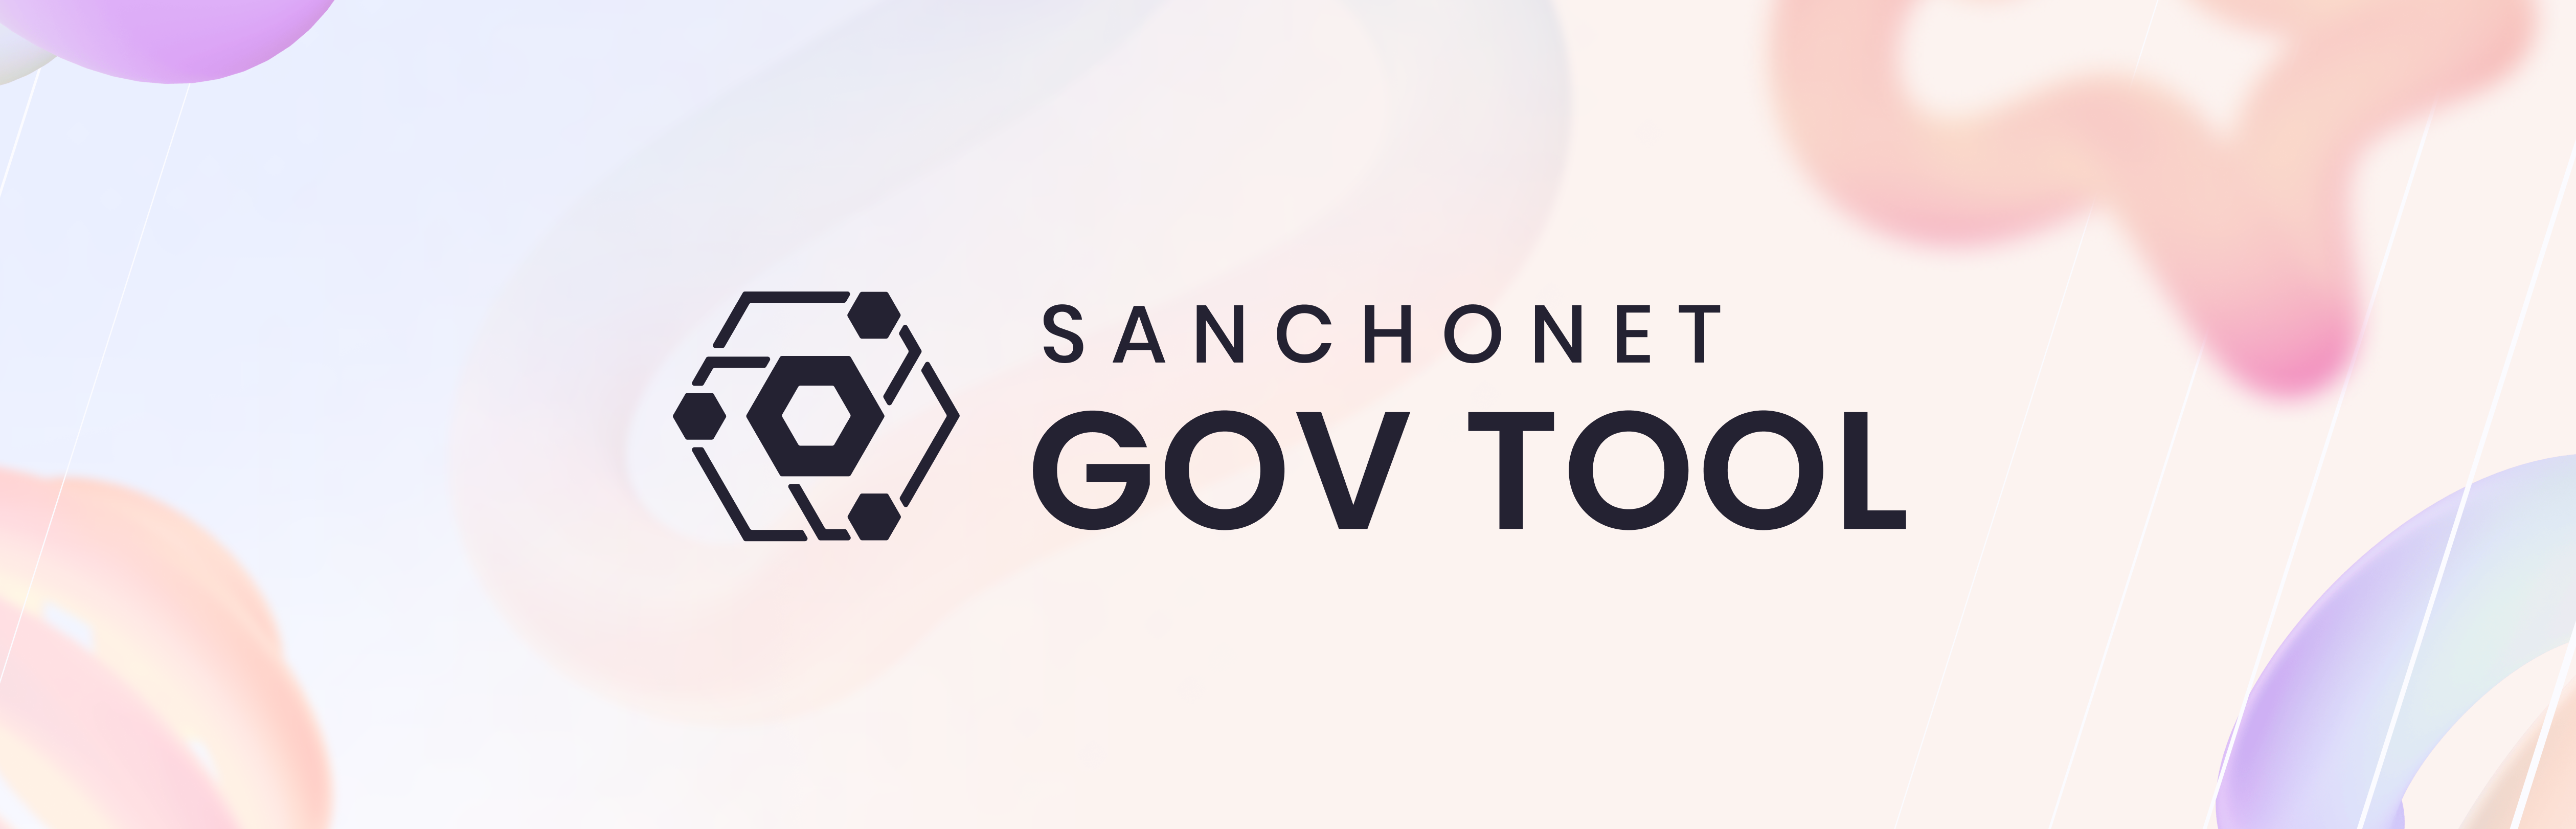 sanchonet-govtool-header.png